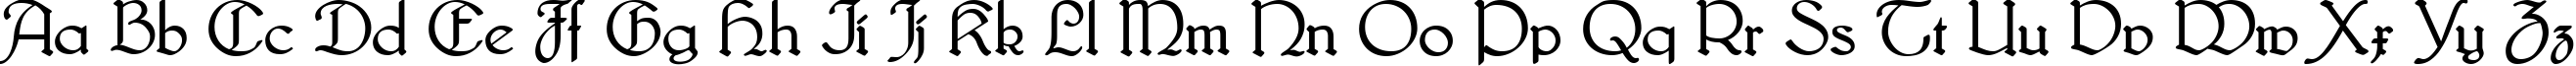 Пример написания английского алфавита шрифтом Bridgnorth